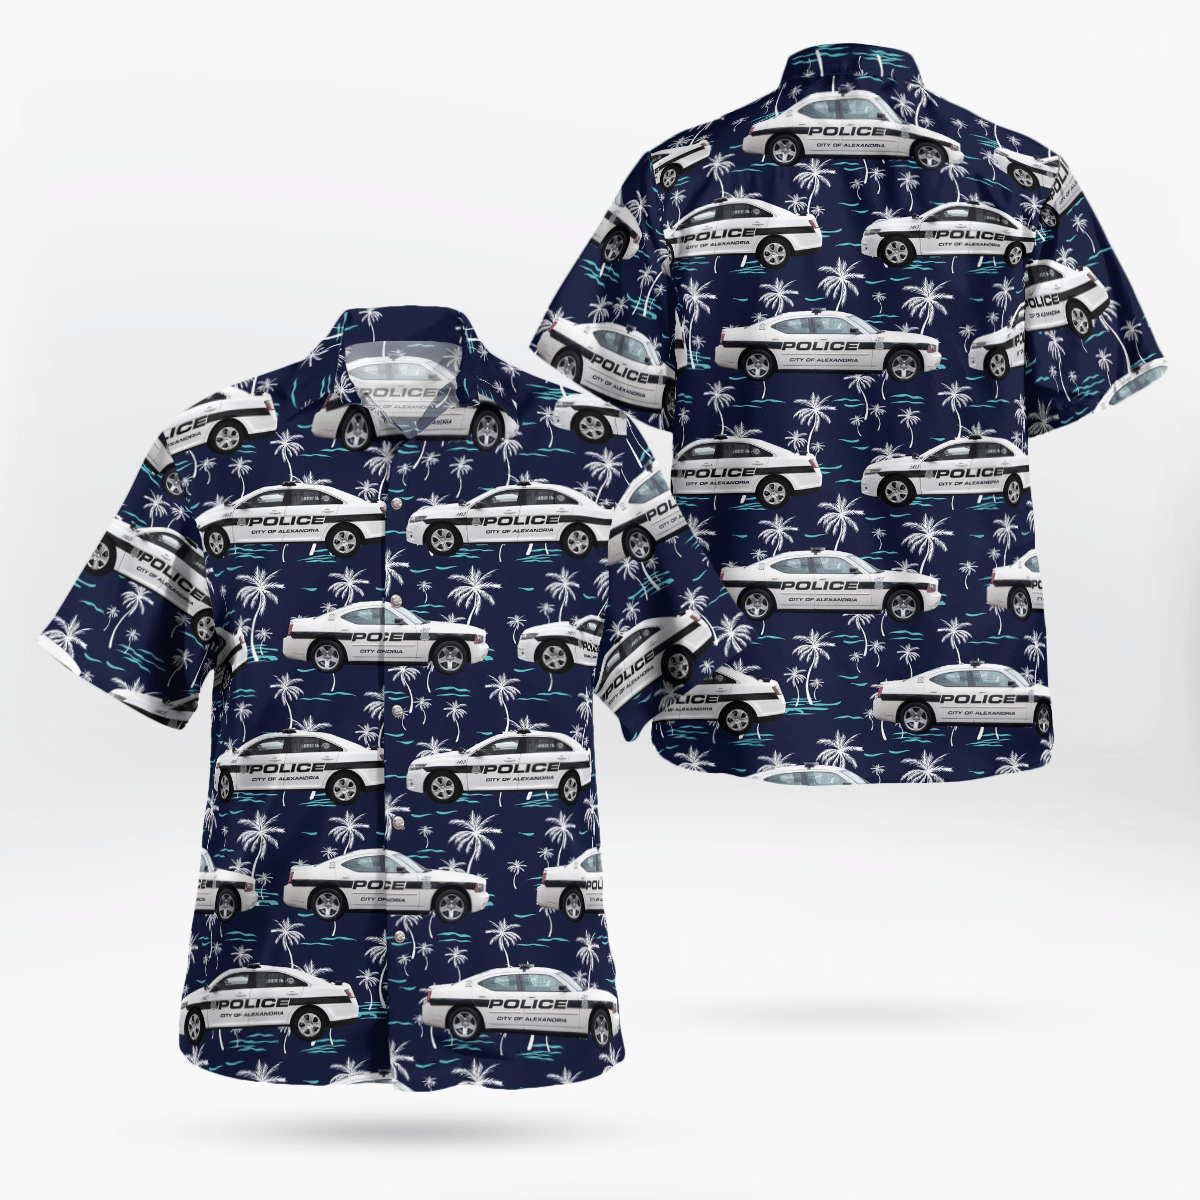 Get a new Hawaiian shirt to enjoy summer vacation 252